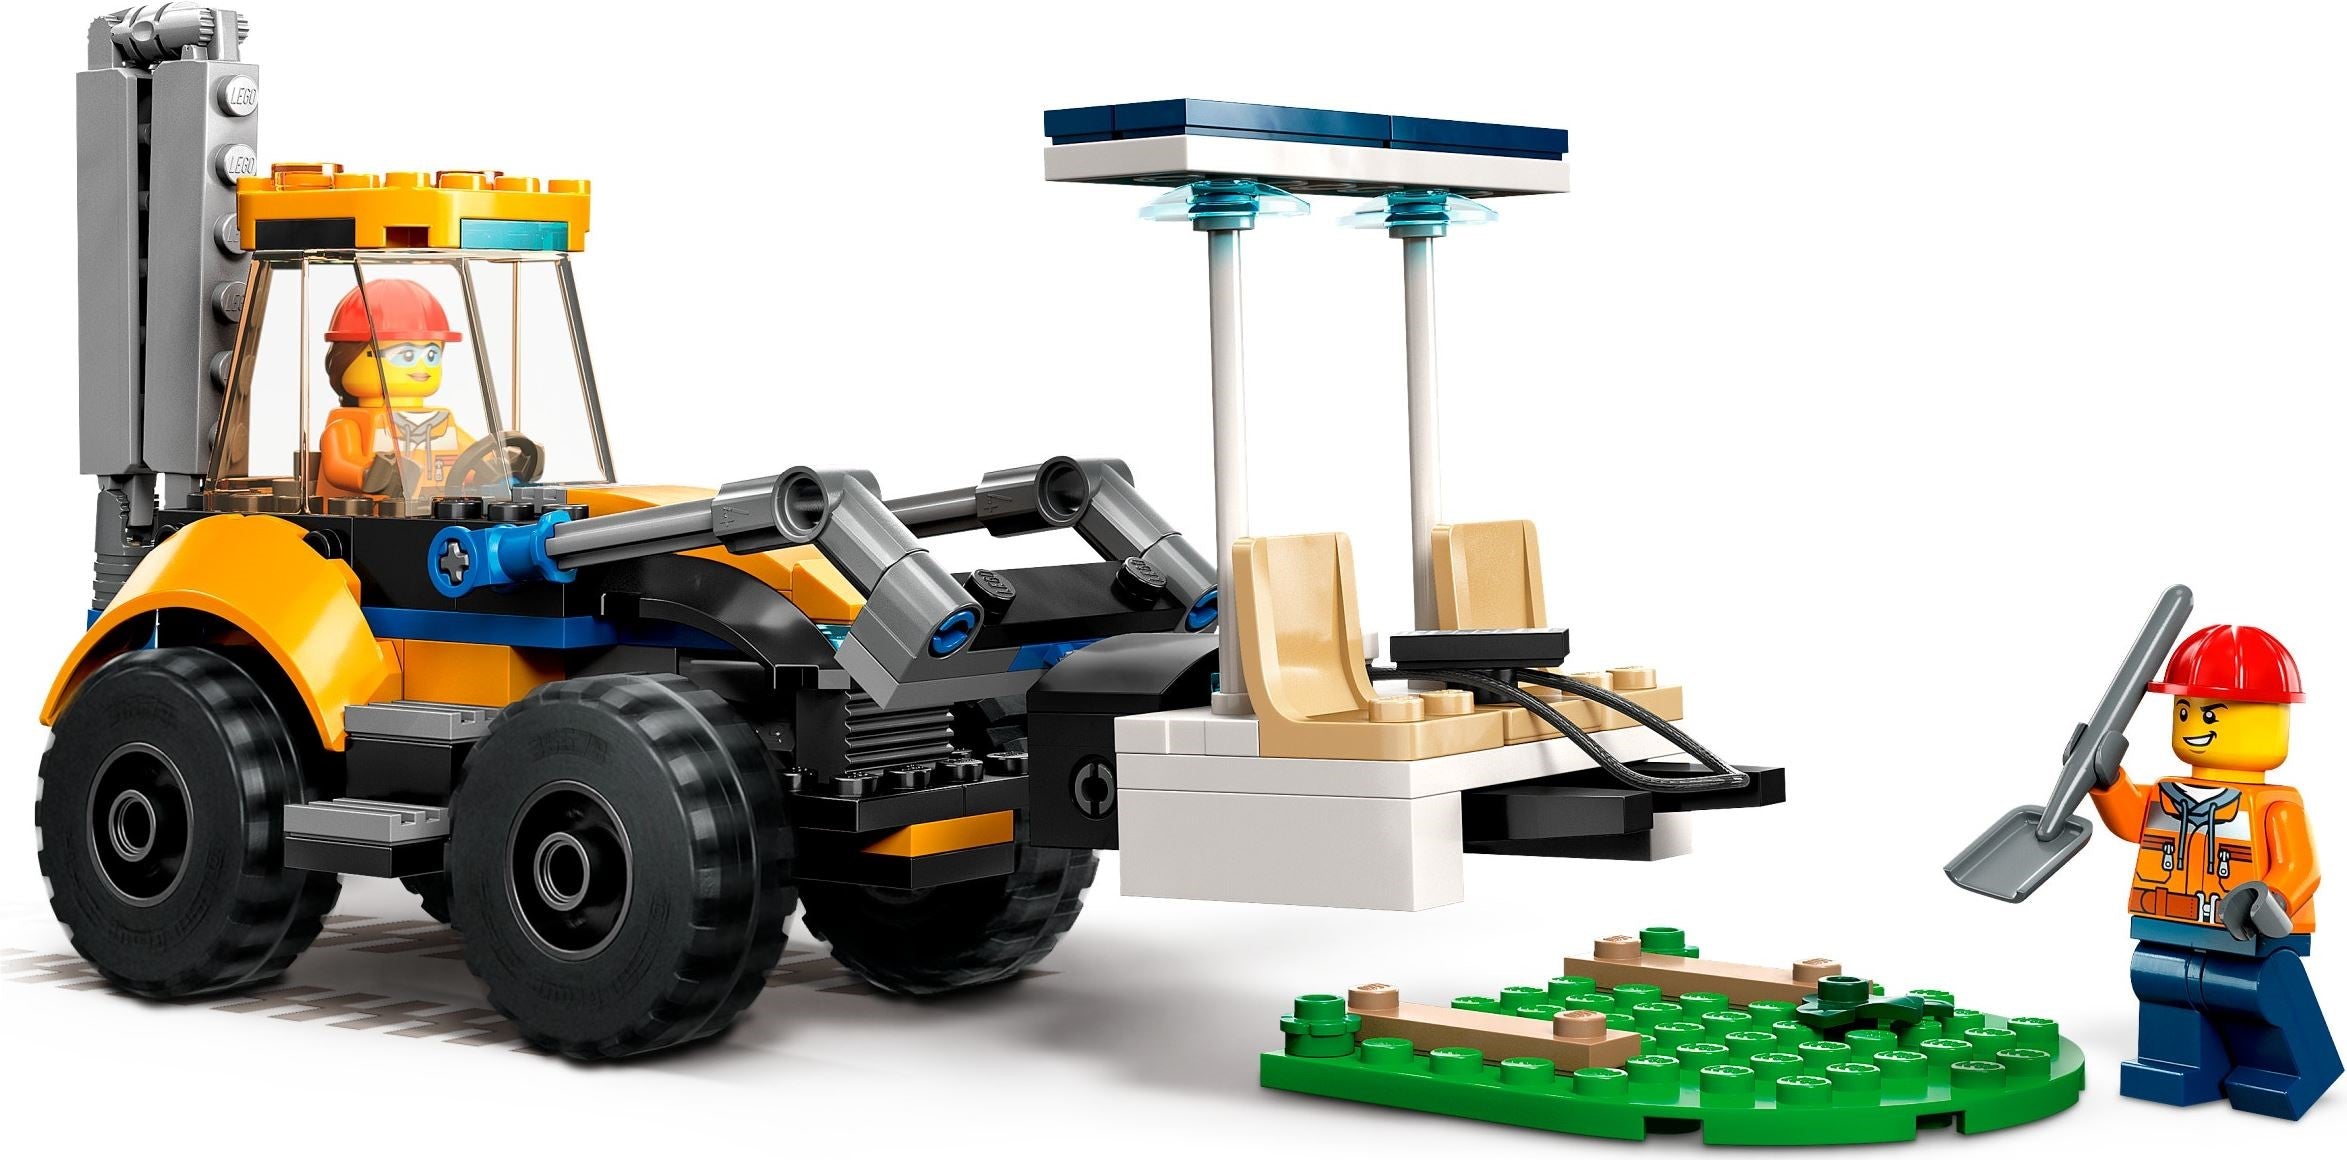 LEGO 60385 Construction Digger